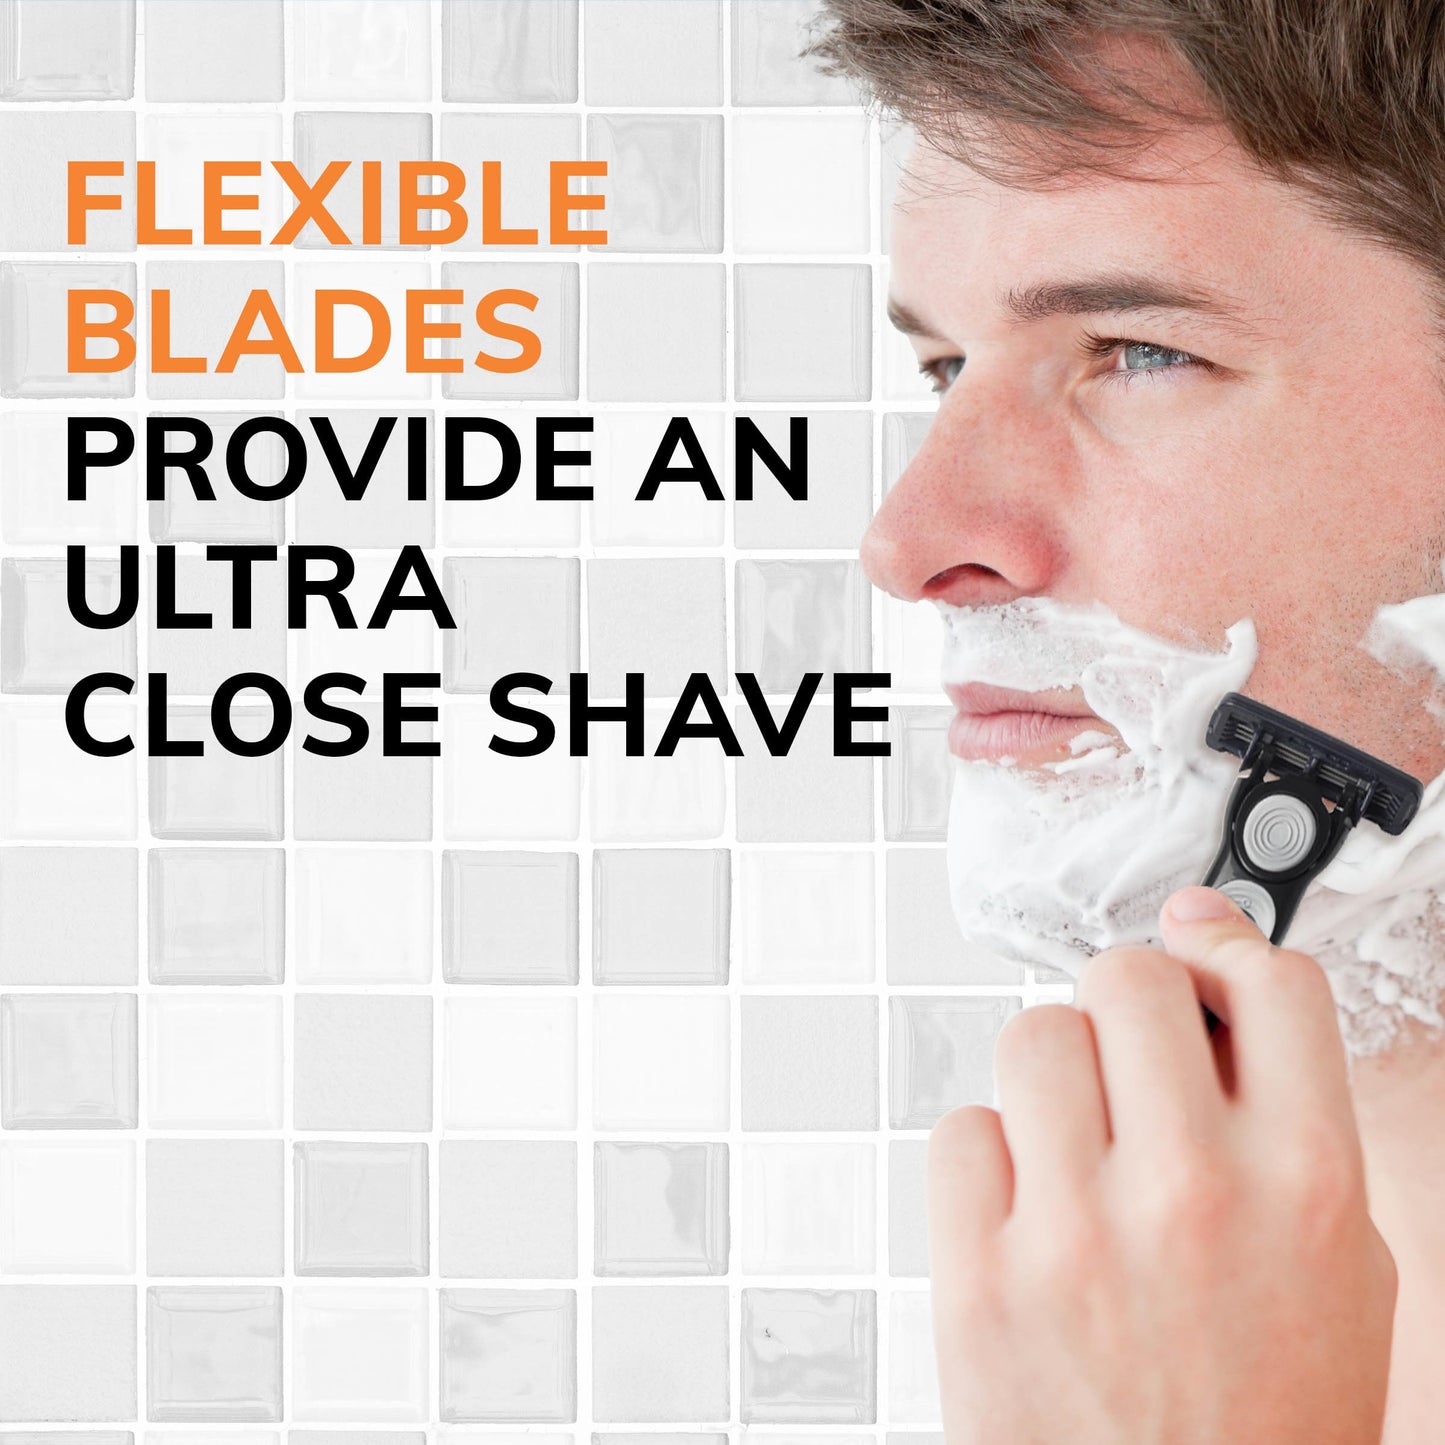 BIC Flex 4 Refillable Razors for Men, Long-Lasting 4 Blade Razors for Sensitive Skin, 1 Handle and 4 Cartridges, 5 Piece Shaving Kit